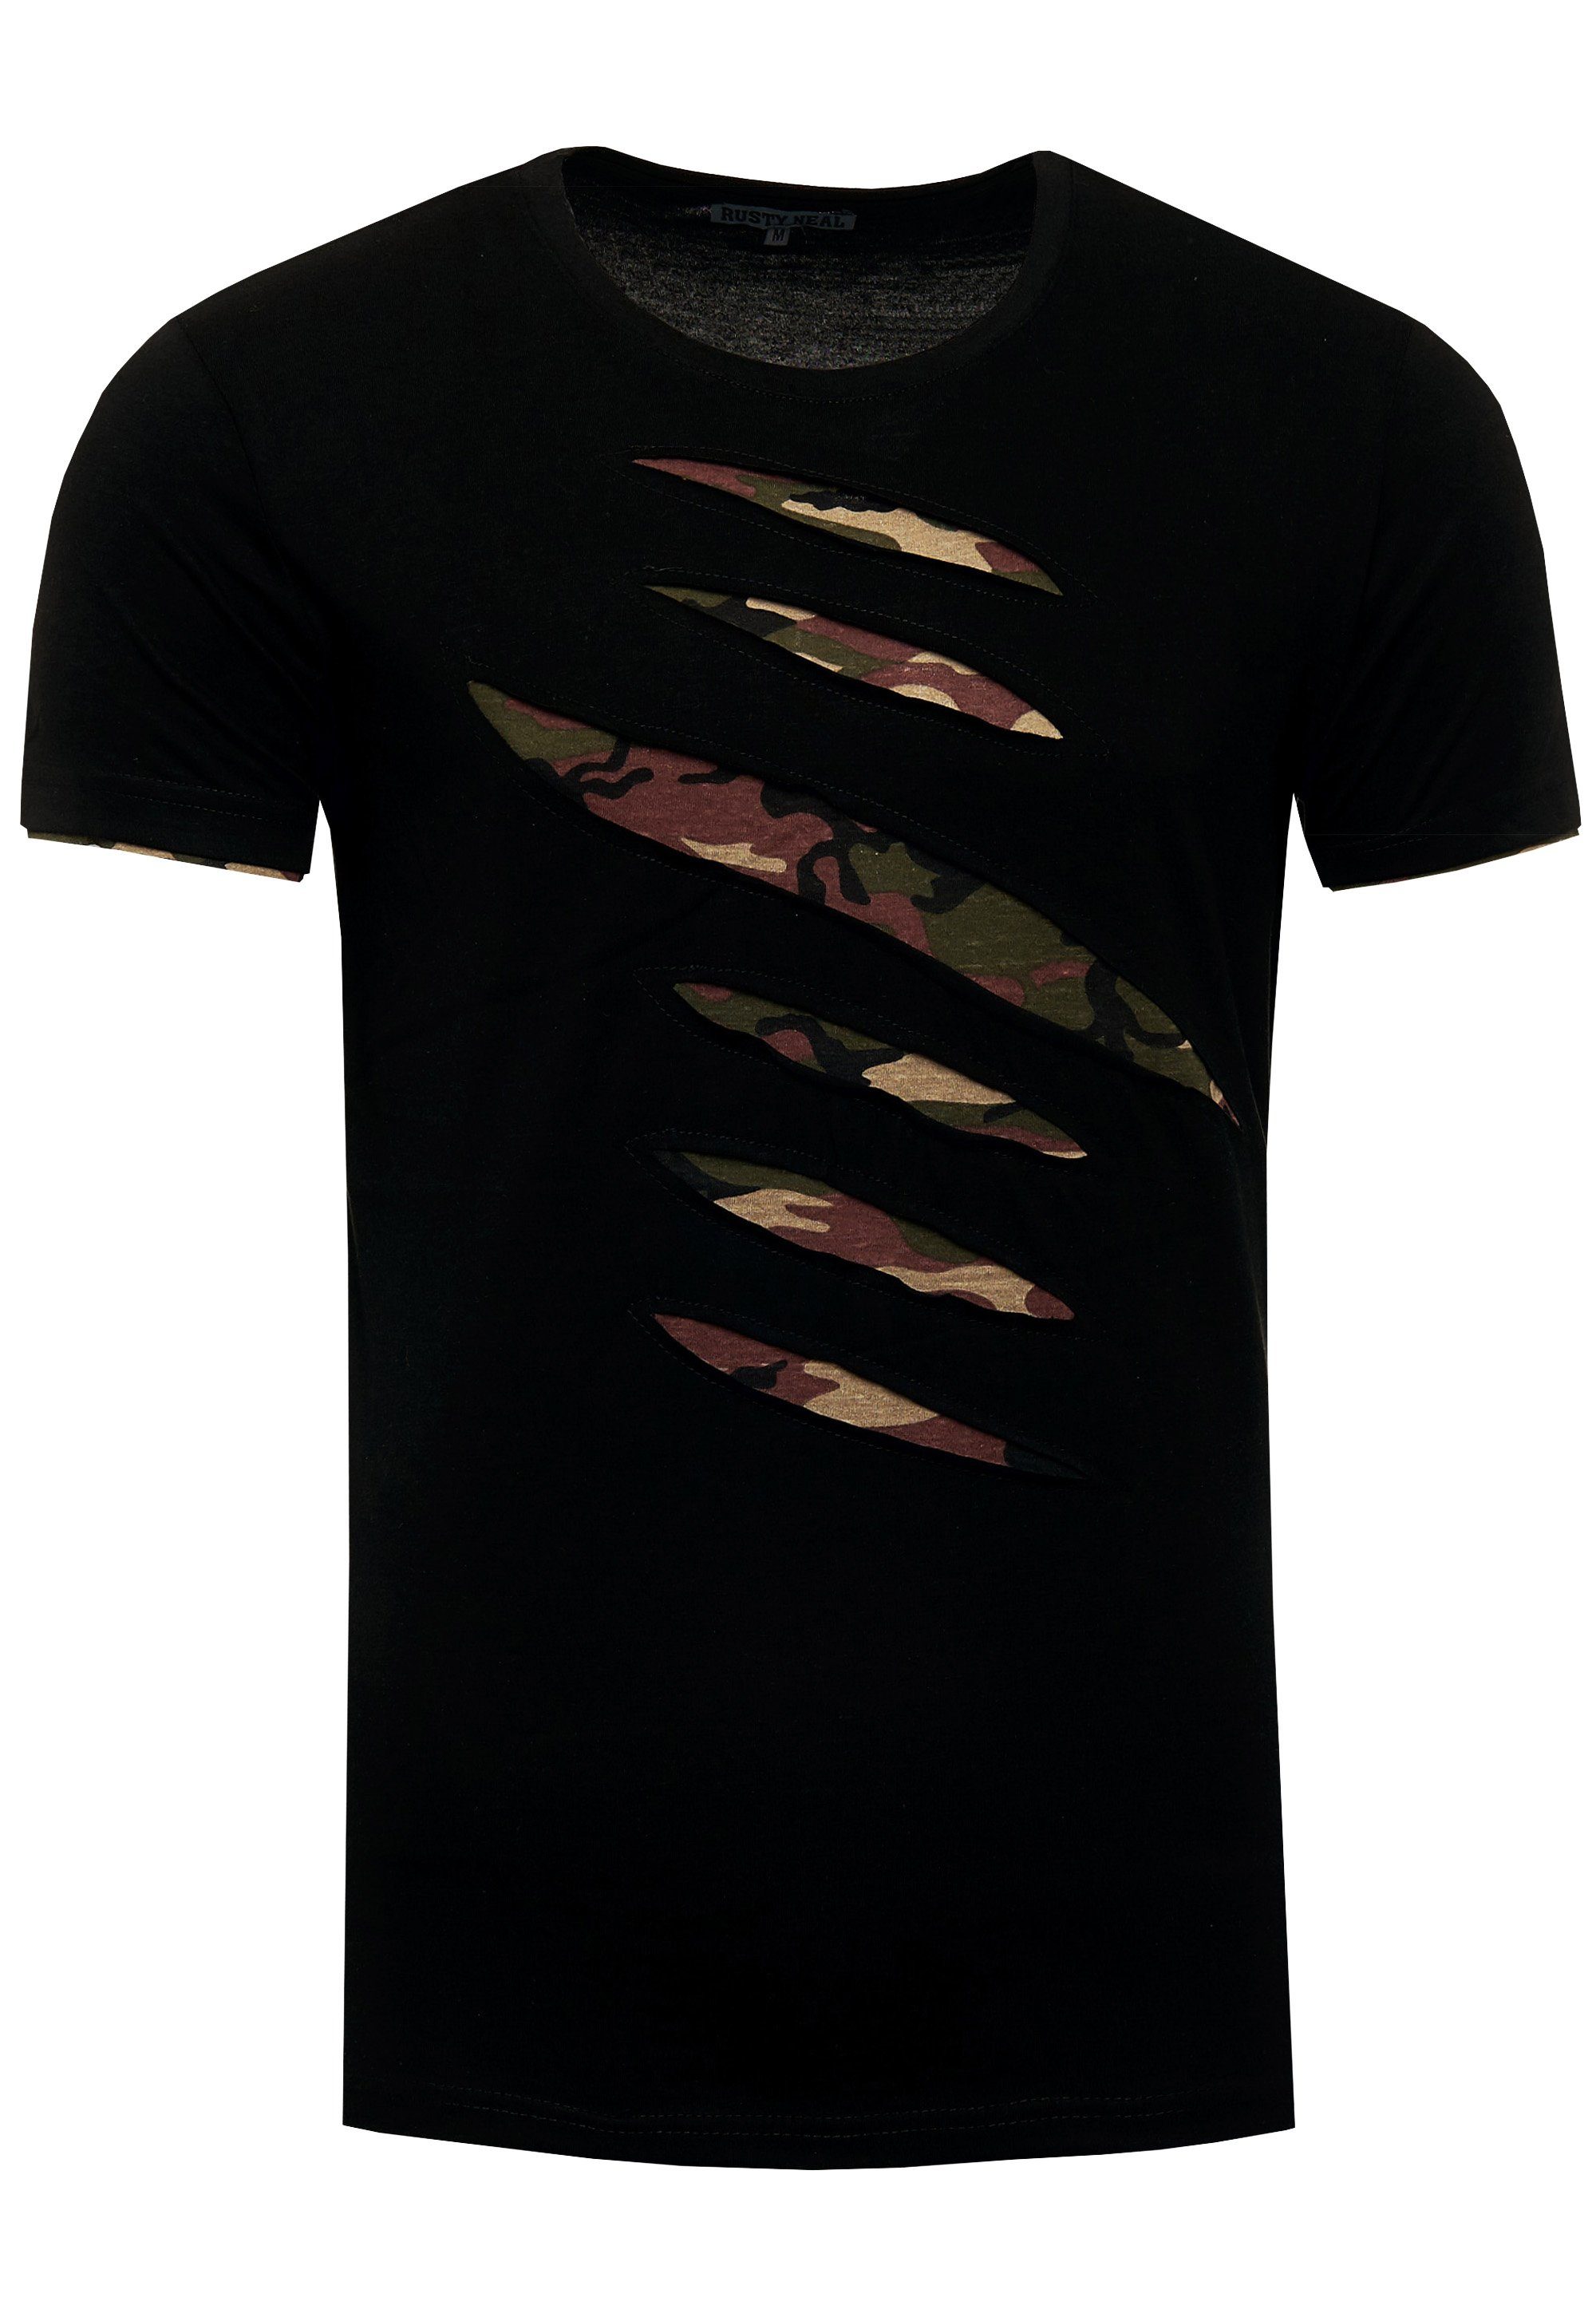 Rusty Neal trendigen 2-in-1-Design T-Shirt schwarz im